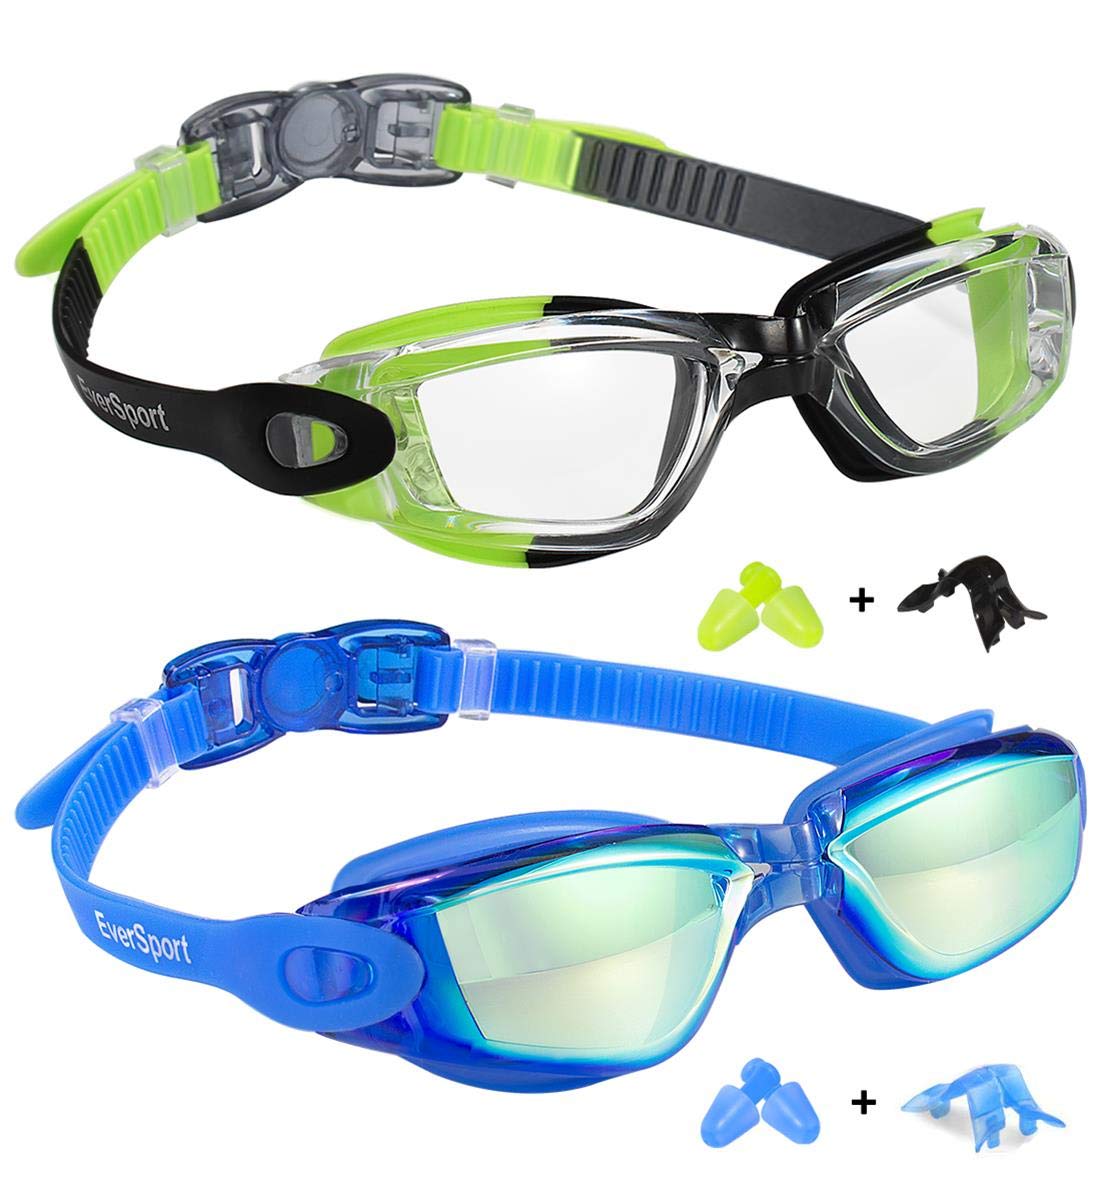 Best Swim Goggles for Kids